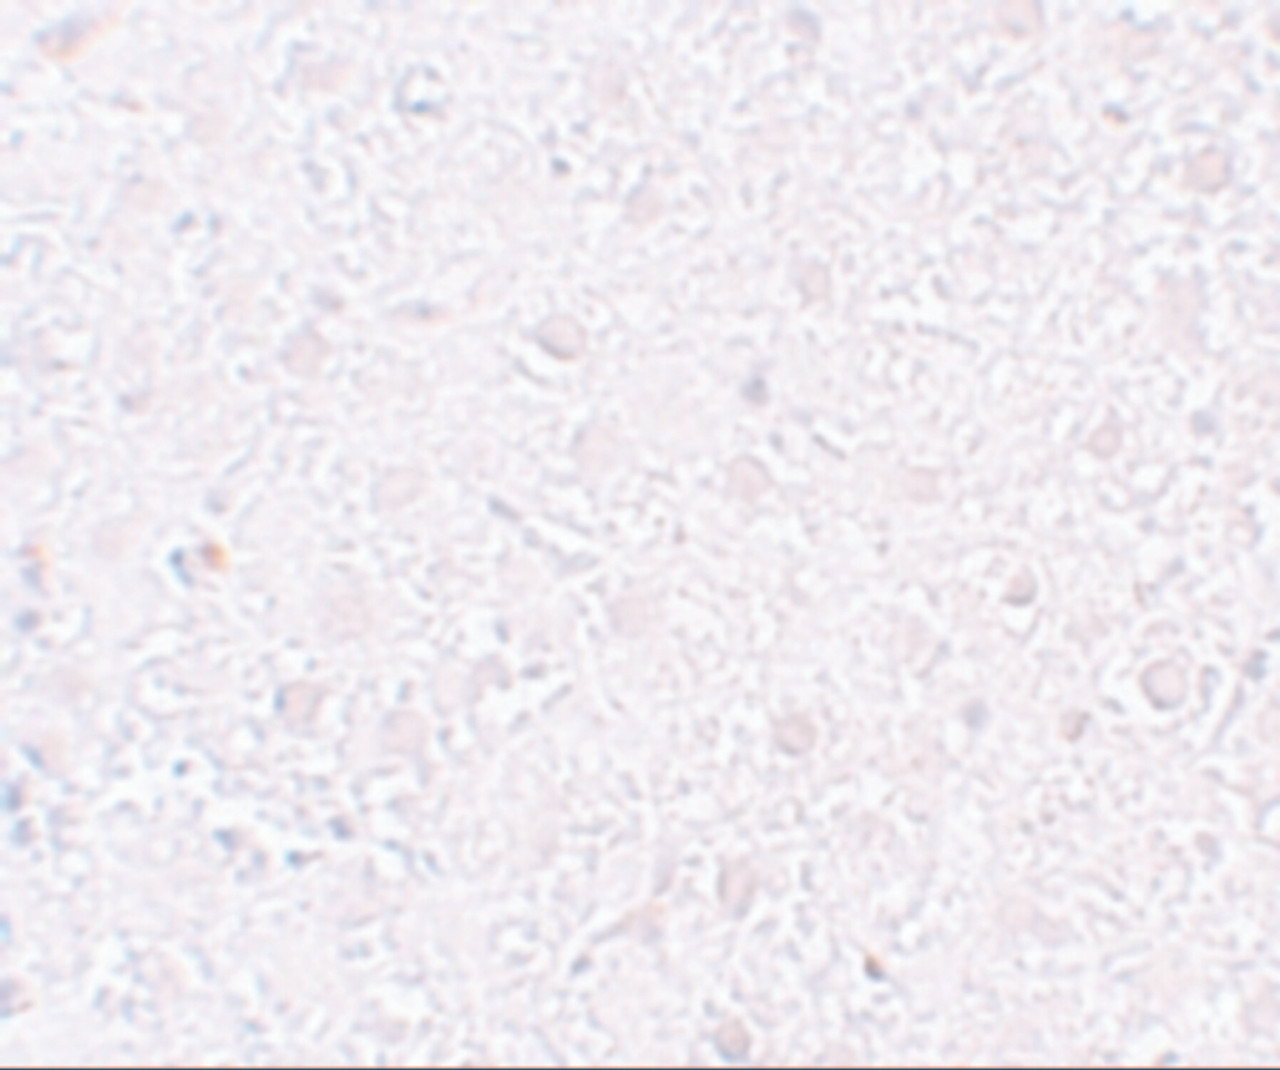 Immunohistochemistry of MOX1 in rat liver tissue with MOX1 antibody at 10 ug/mL.